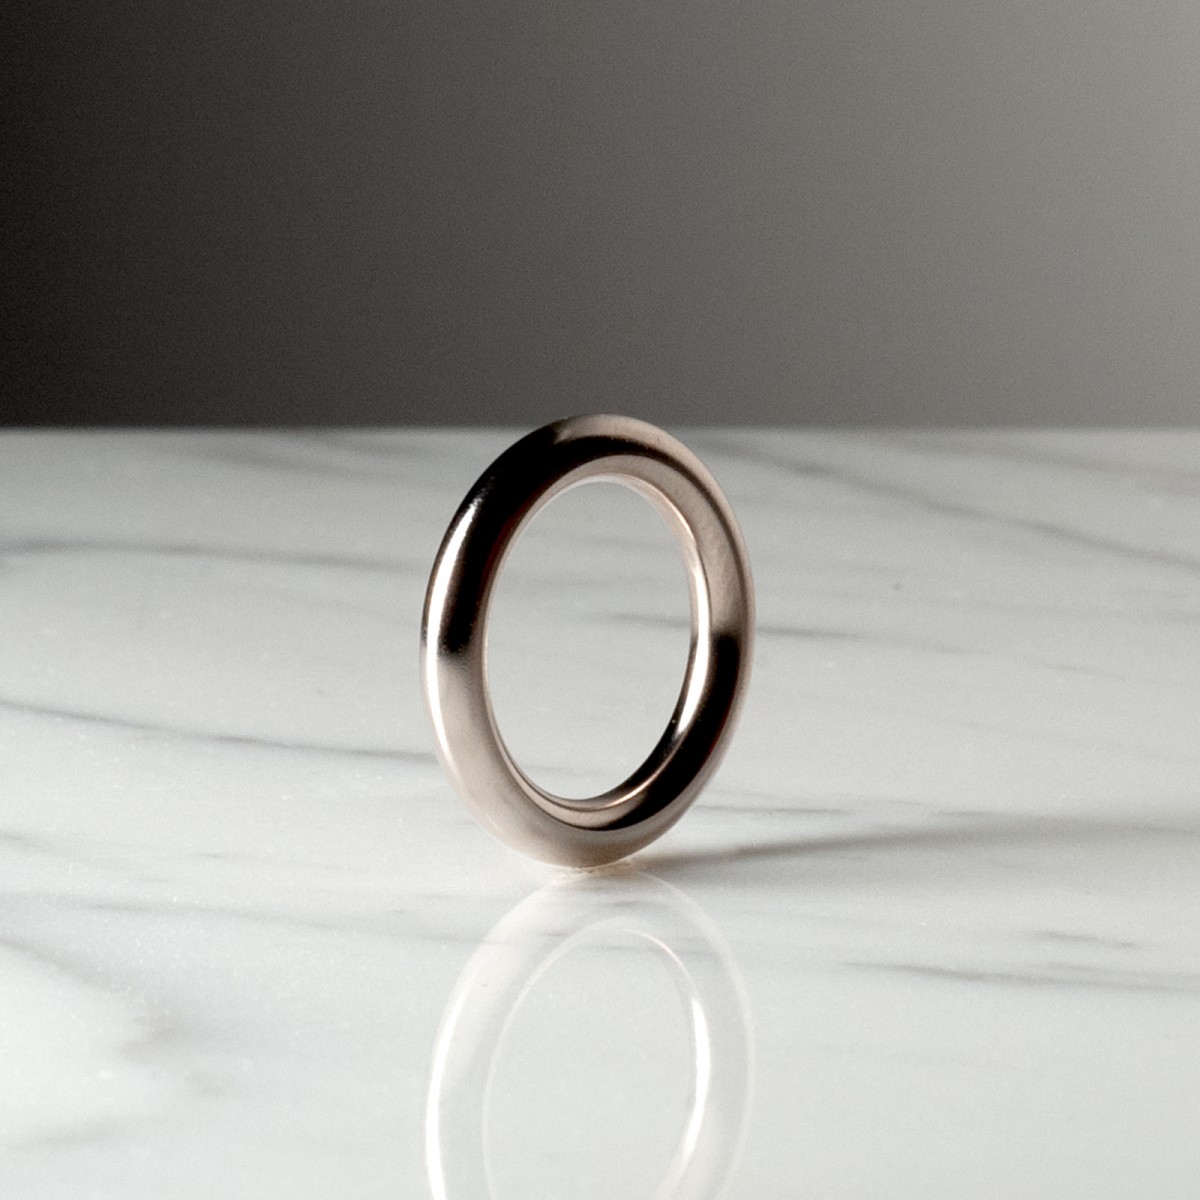 ROND 4MM 2059 - Wedding ring handmade in France